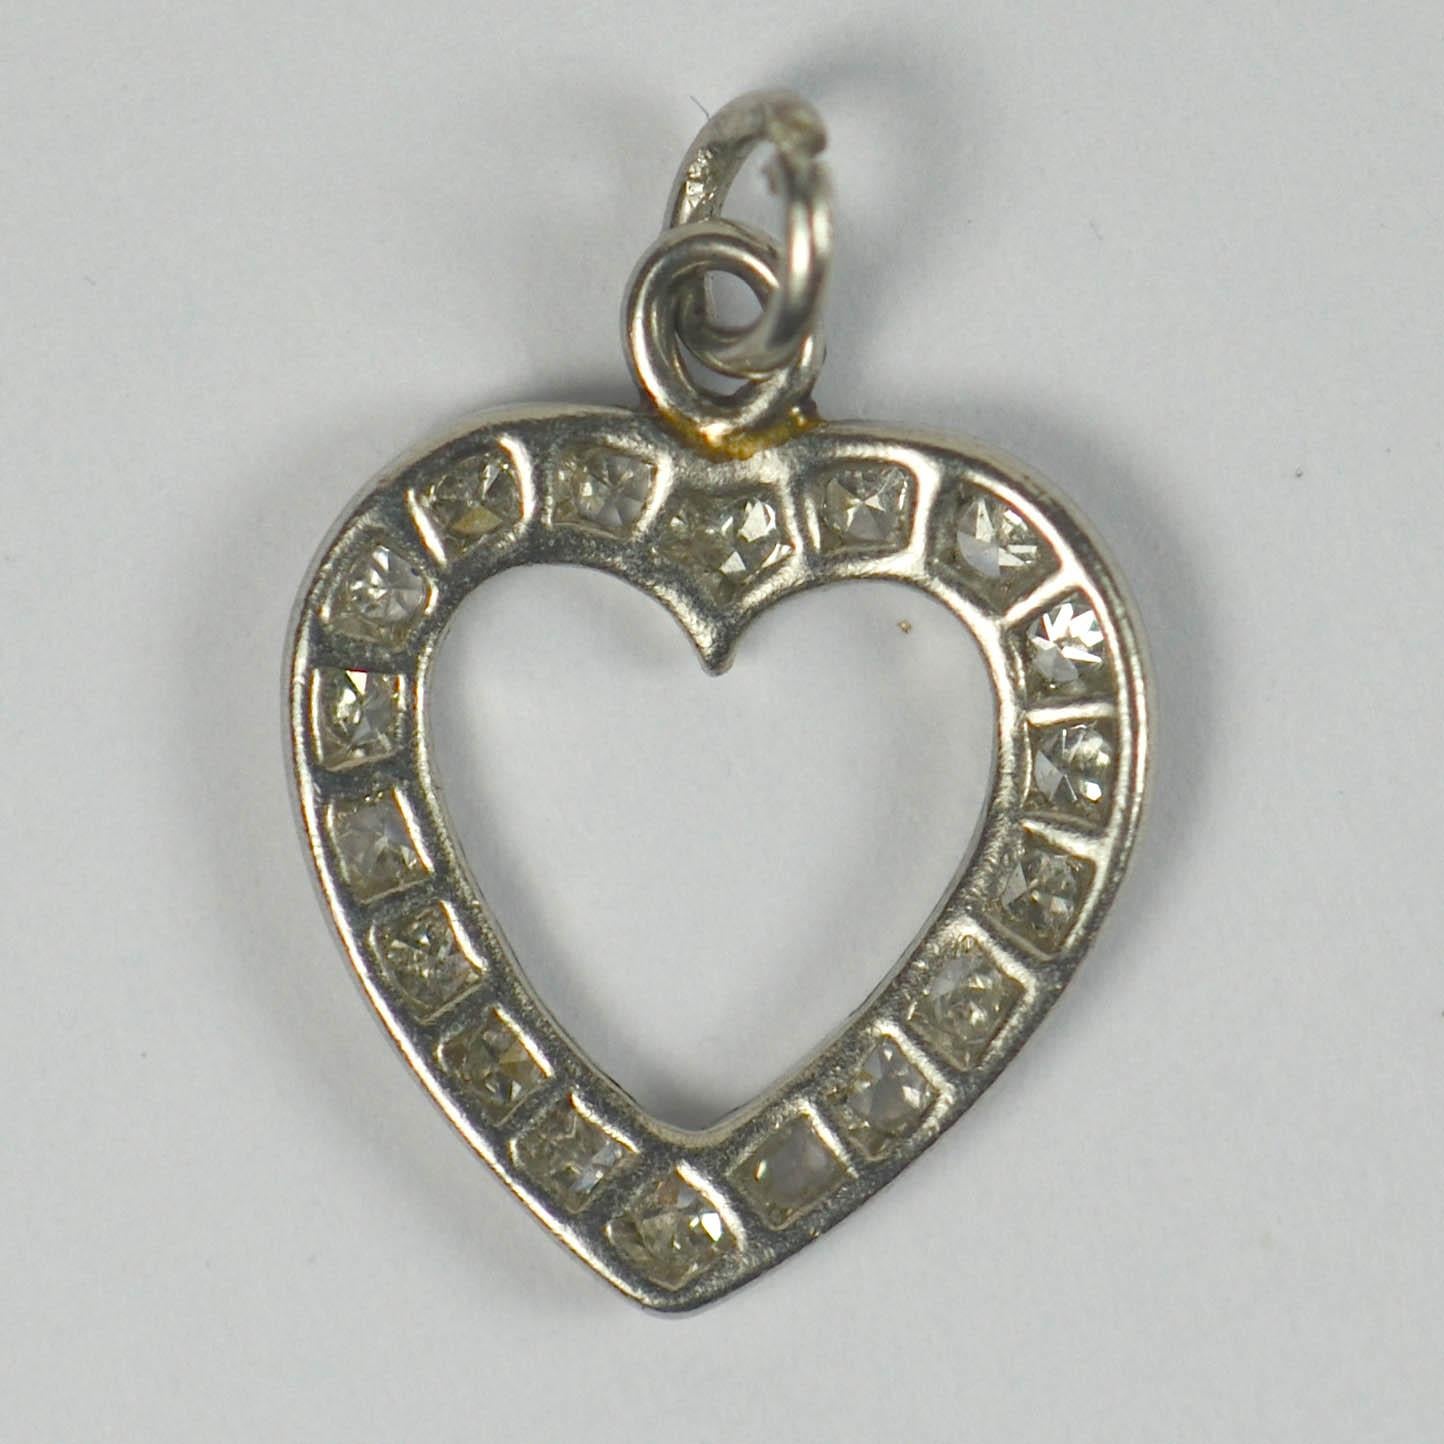 Platinum and diamond charm pendant designed as a heart. 1/2